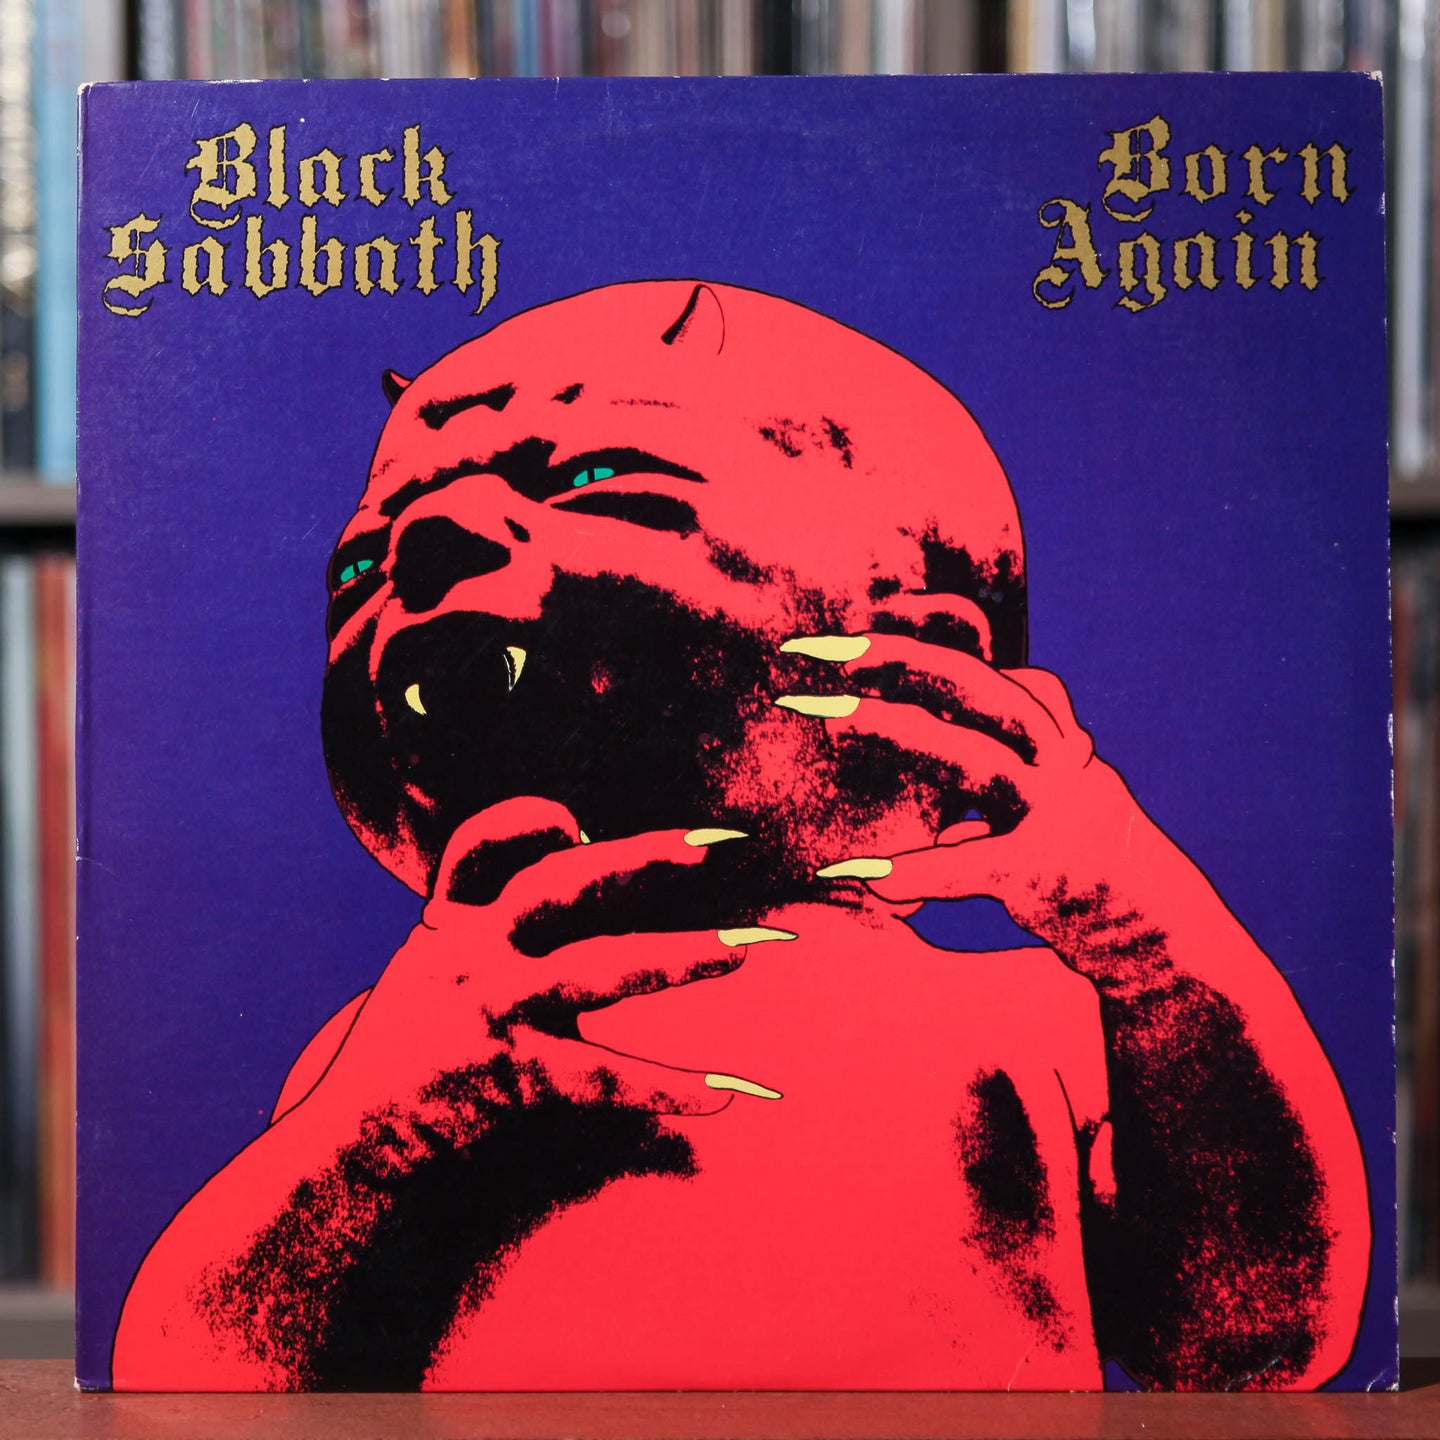 Black Sabbath - Born Again - 1983 Warner Bros, VG+/VG+